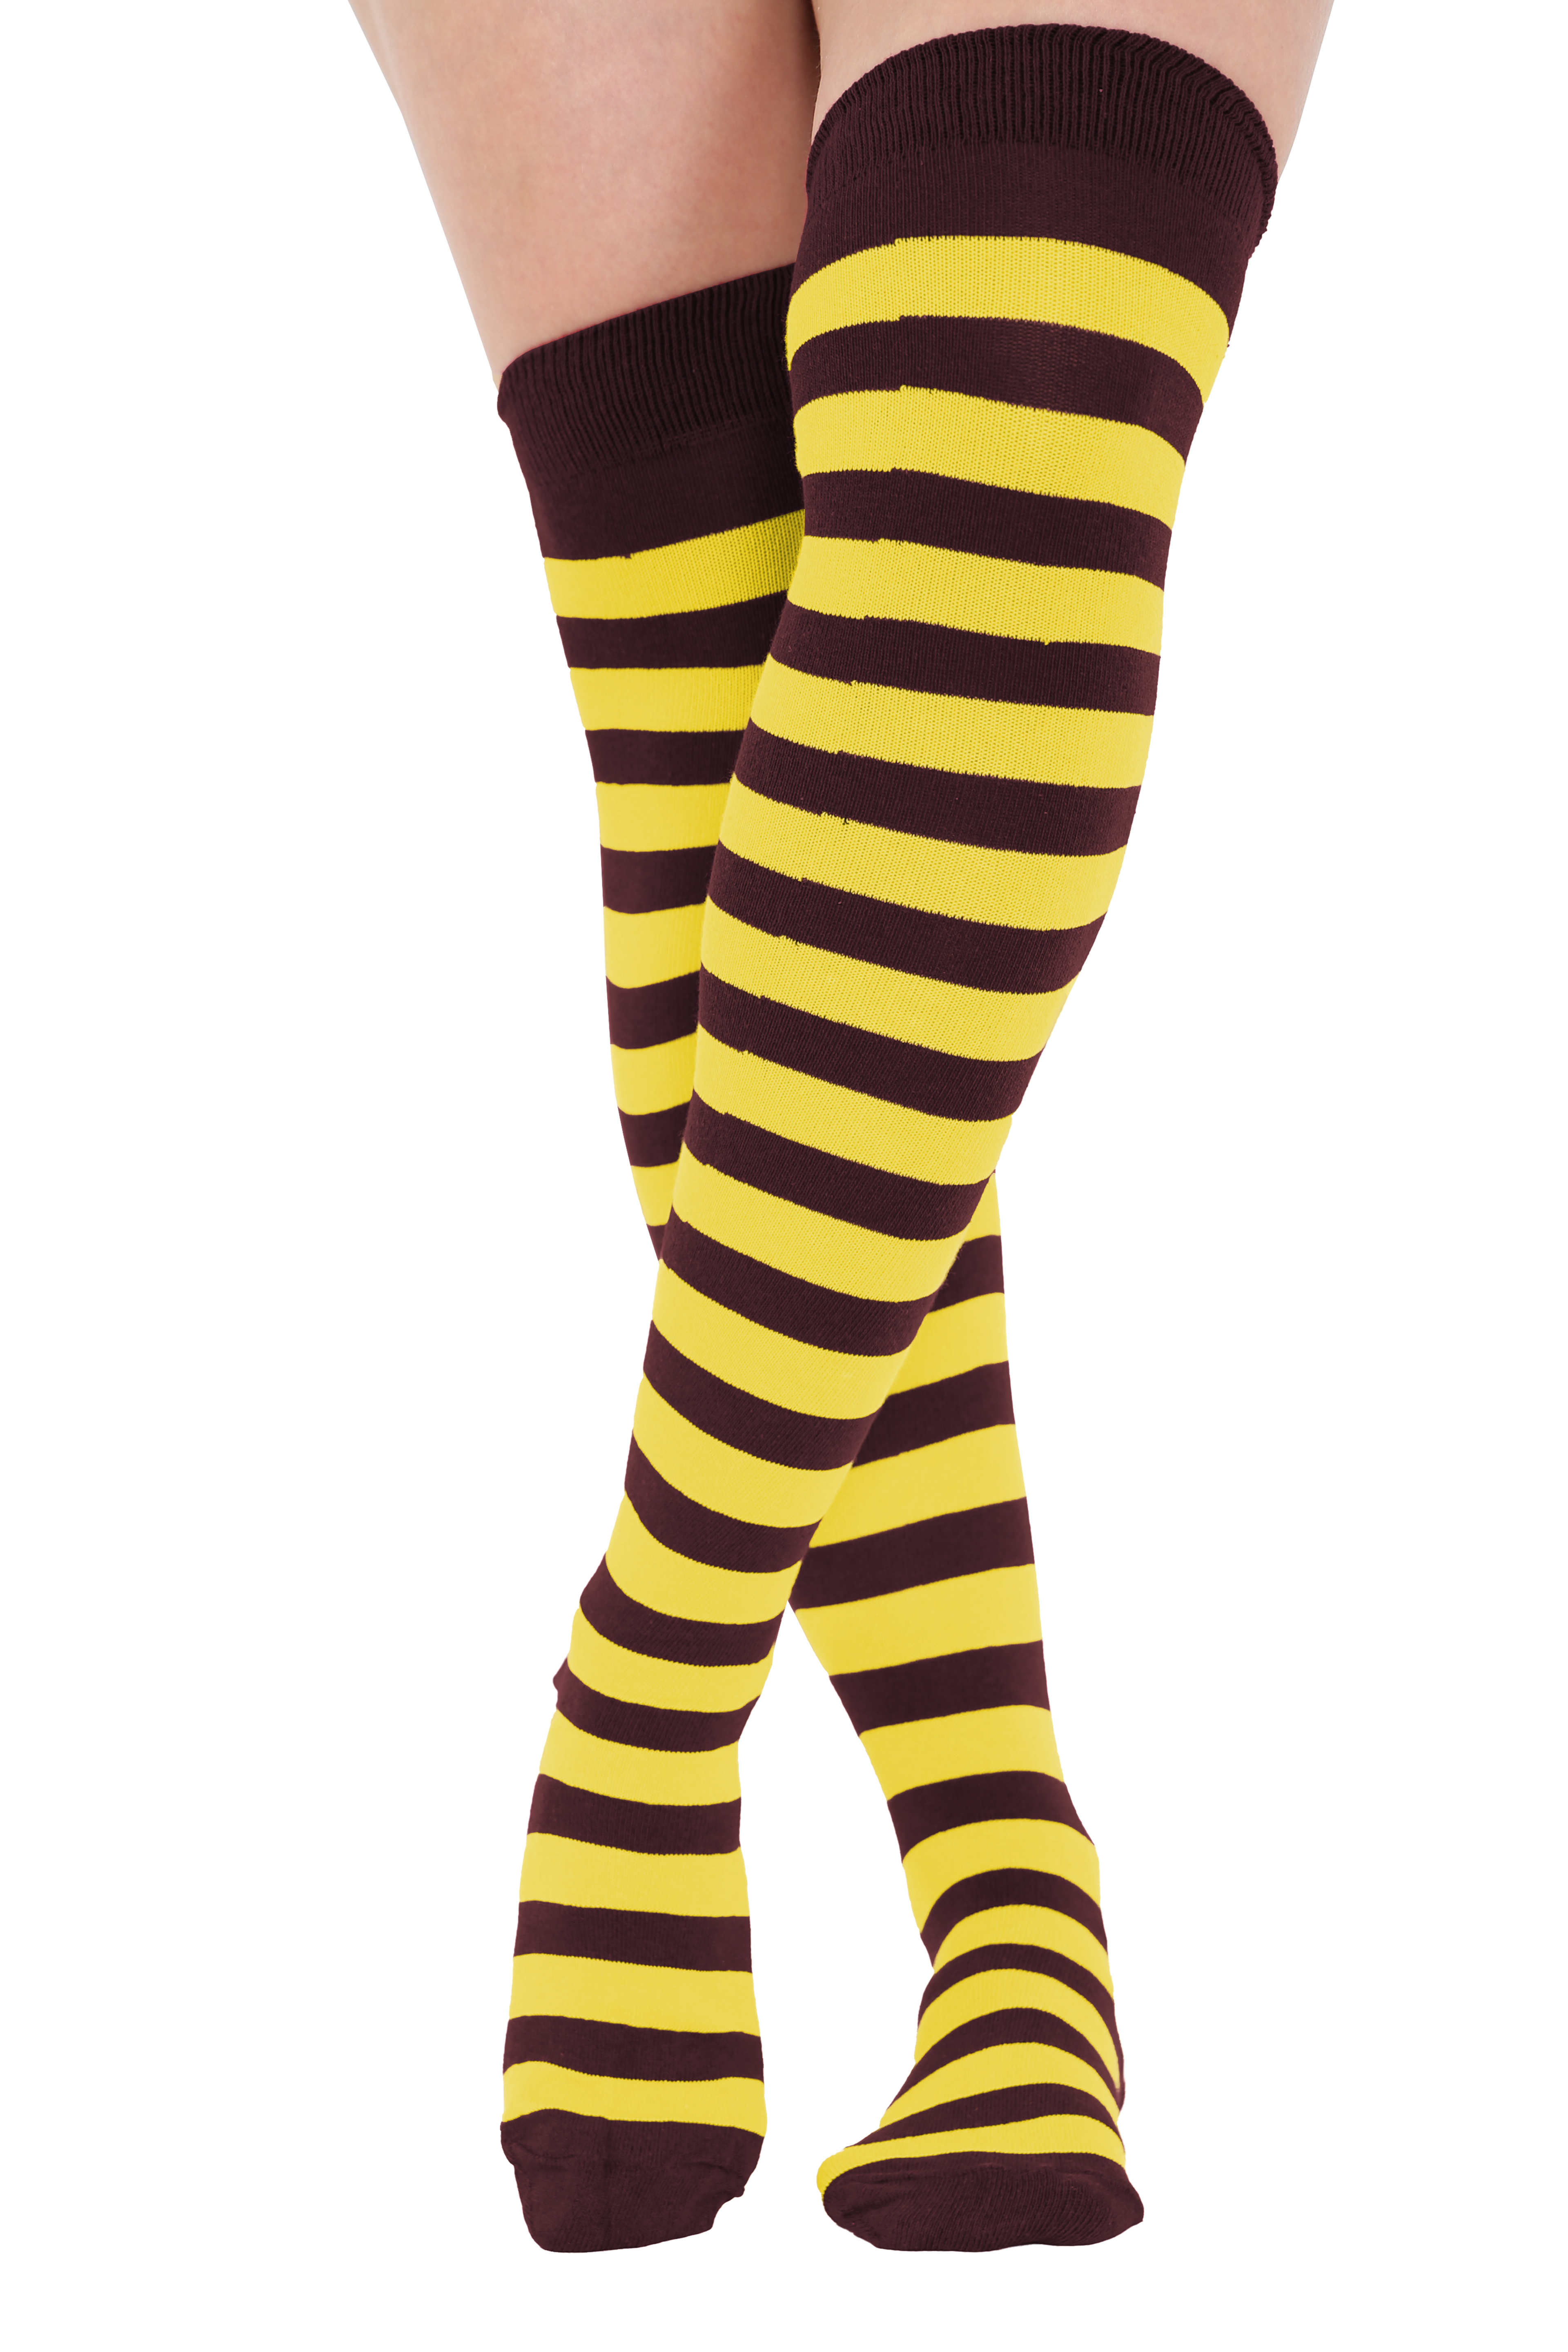 Crazy Chick Maroon and Yellow Wizard stripe OTK socks (12 Pairs)